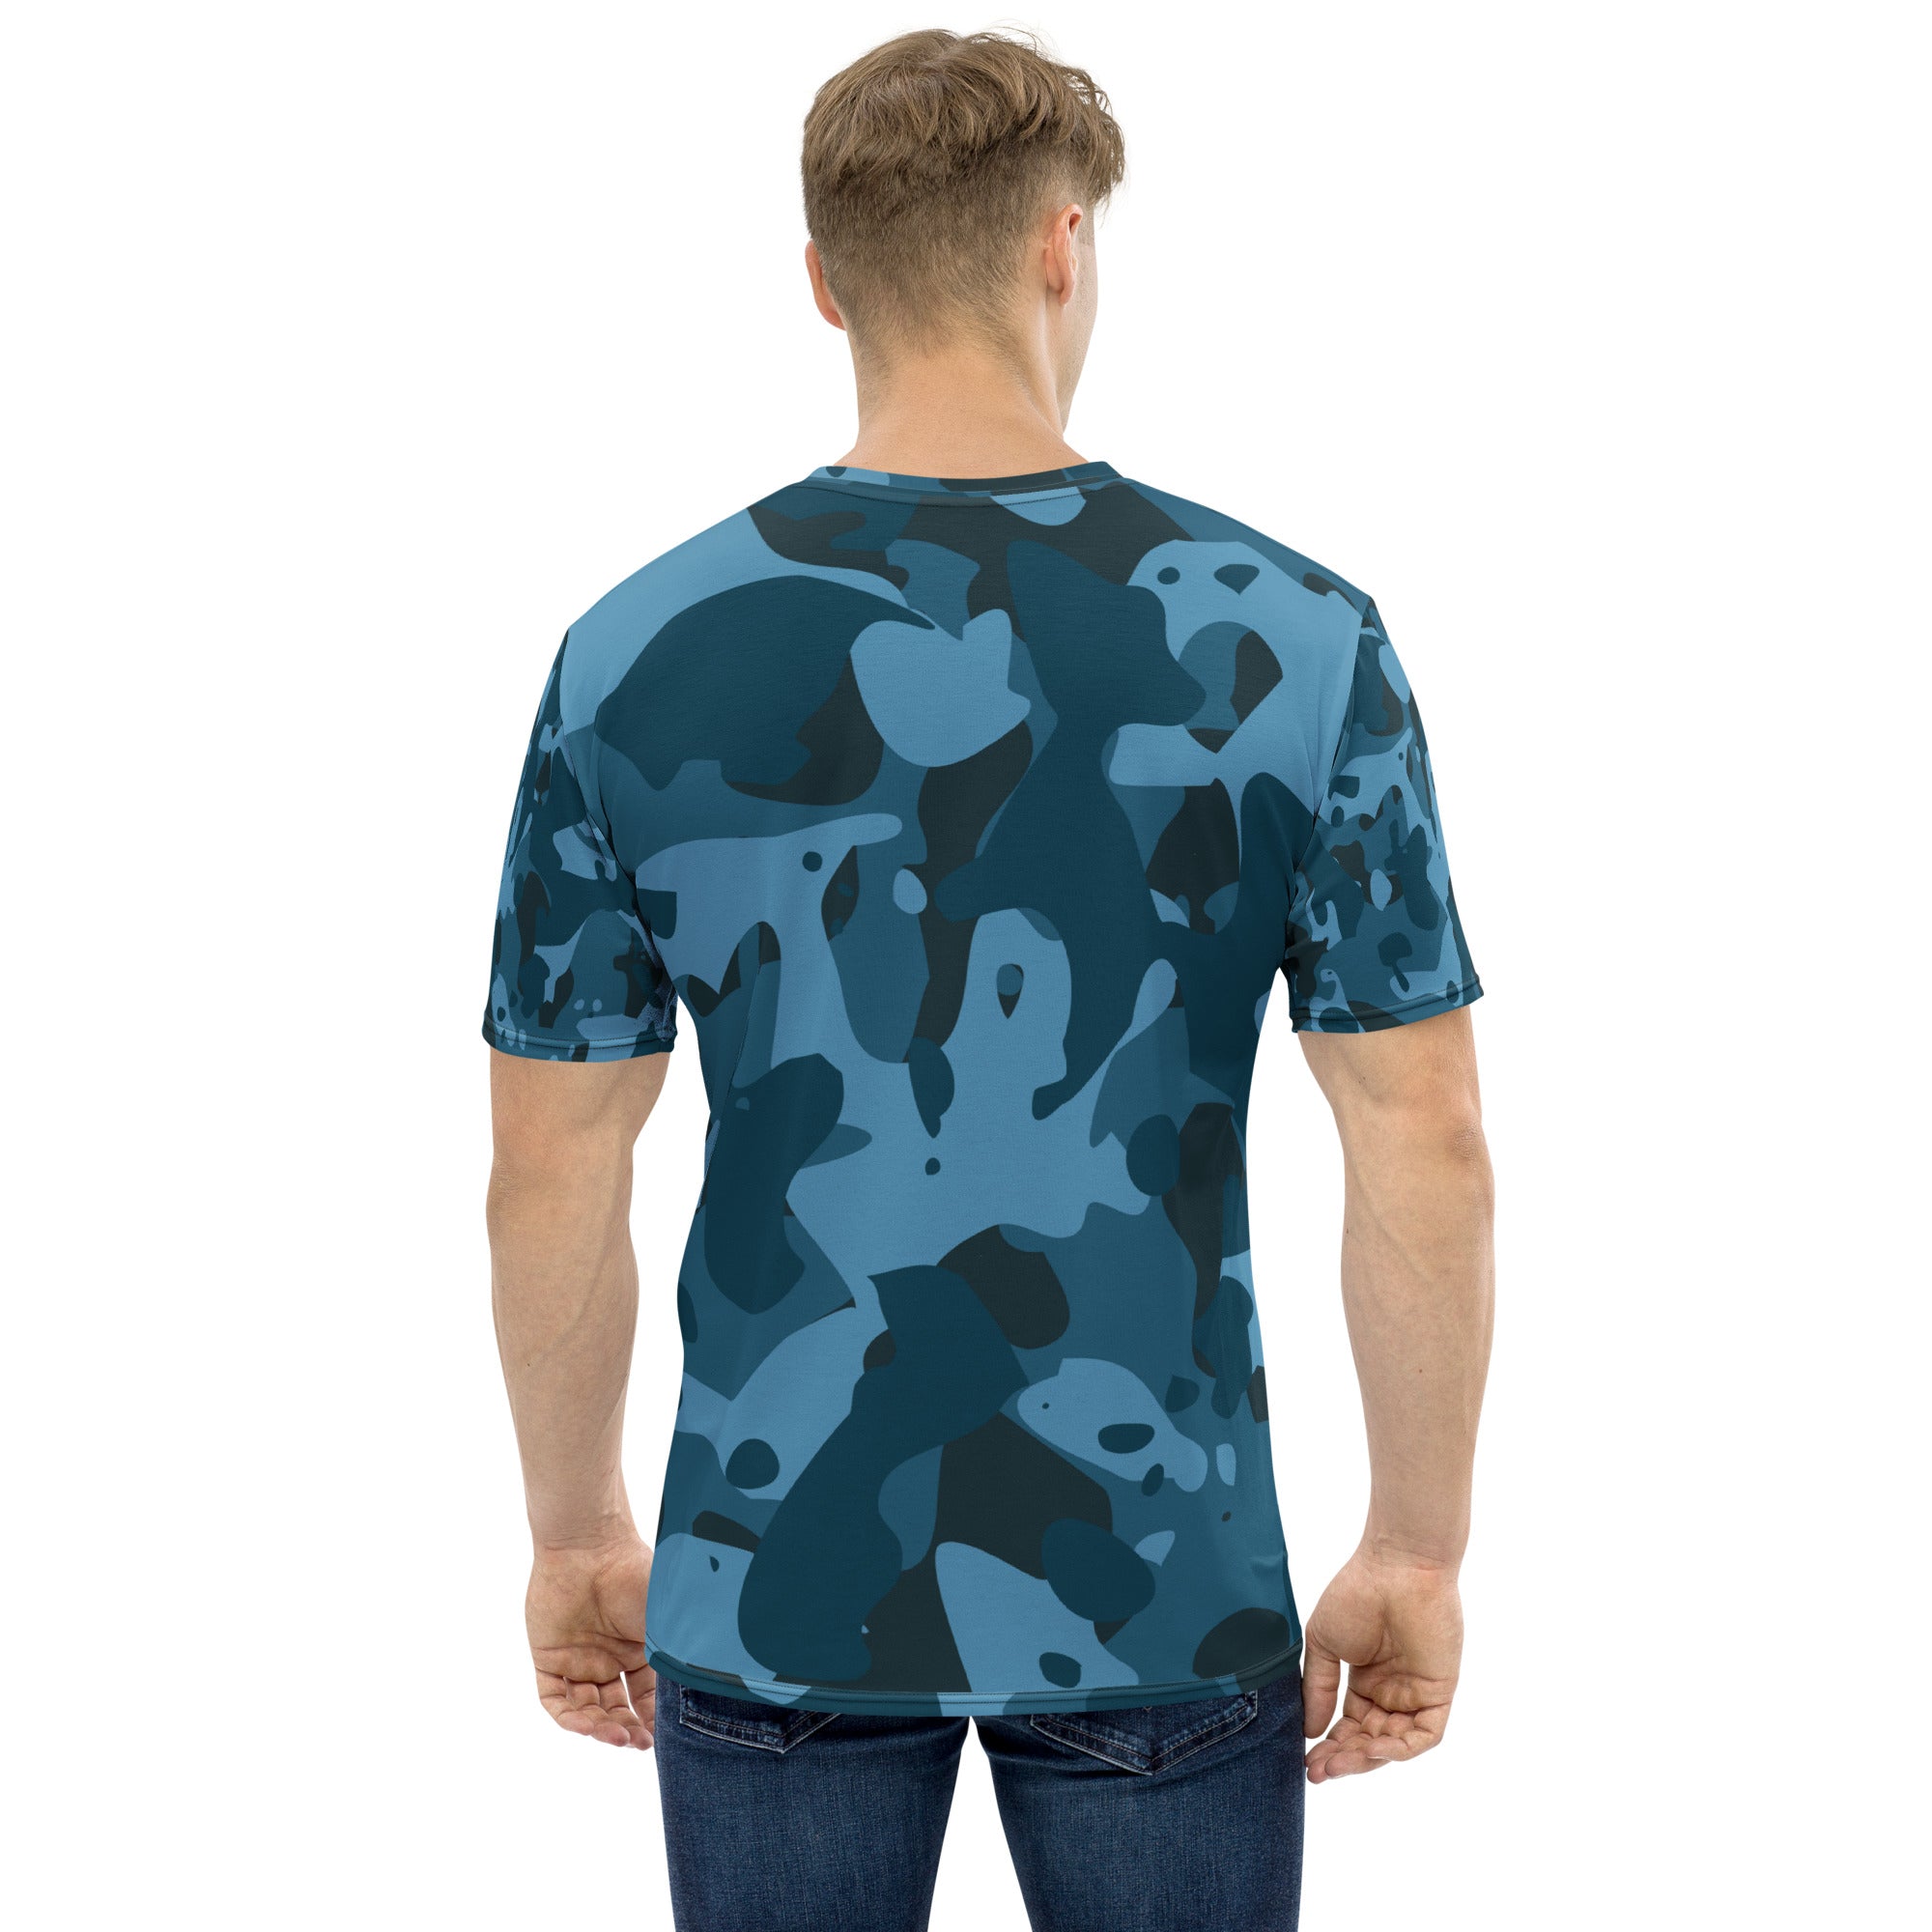 Men's On Duty Skull Printed Camo T-Shirt